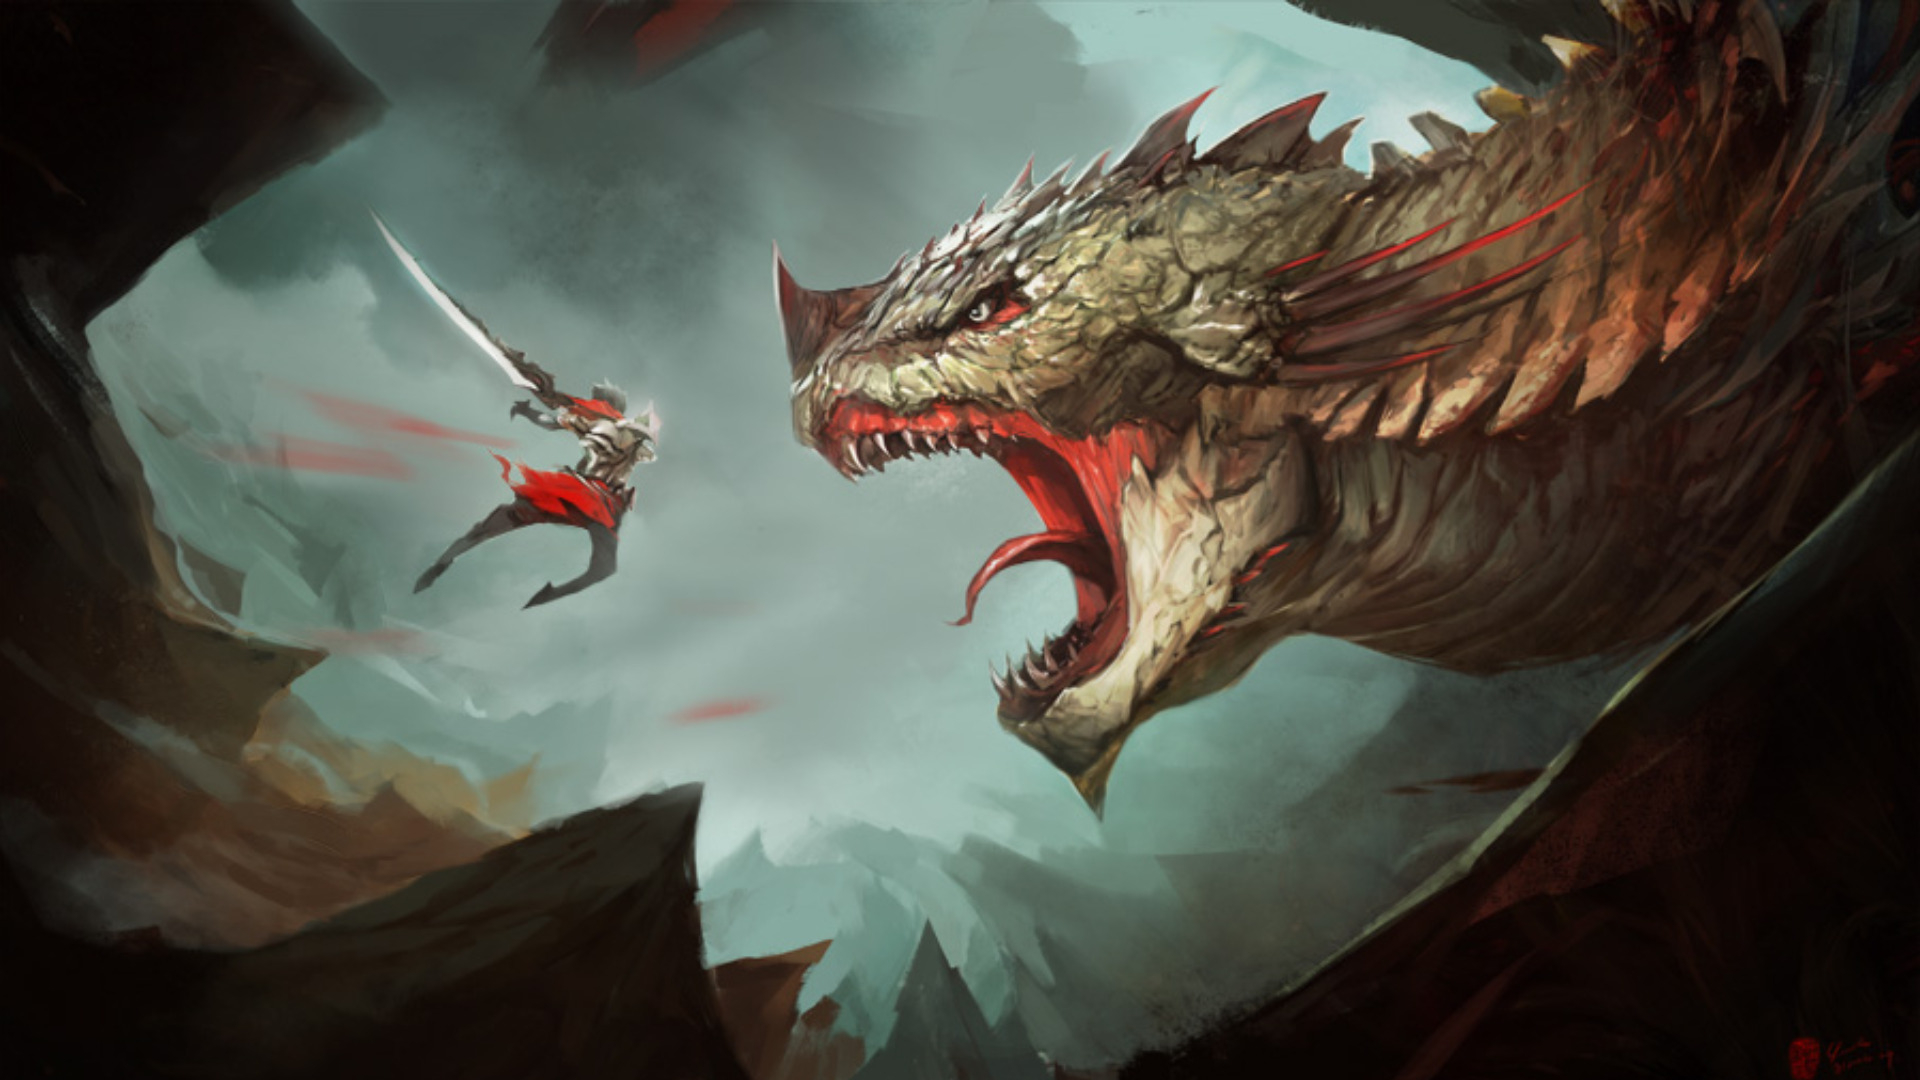 dragão wallpaper,dragon,fictional character,cg artwork,mythical creature,illustration